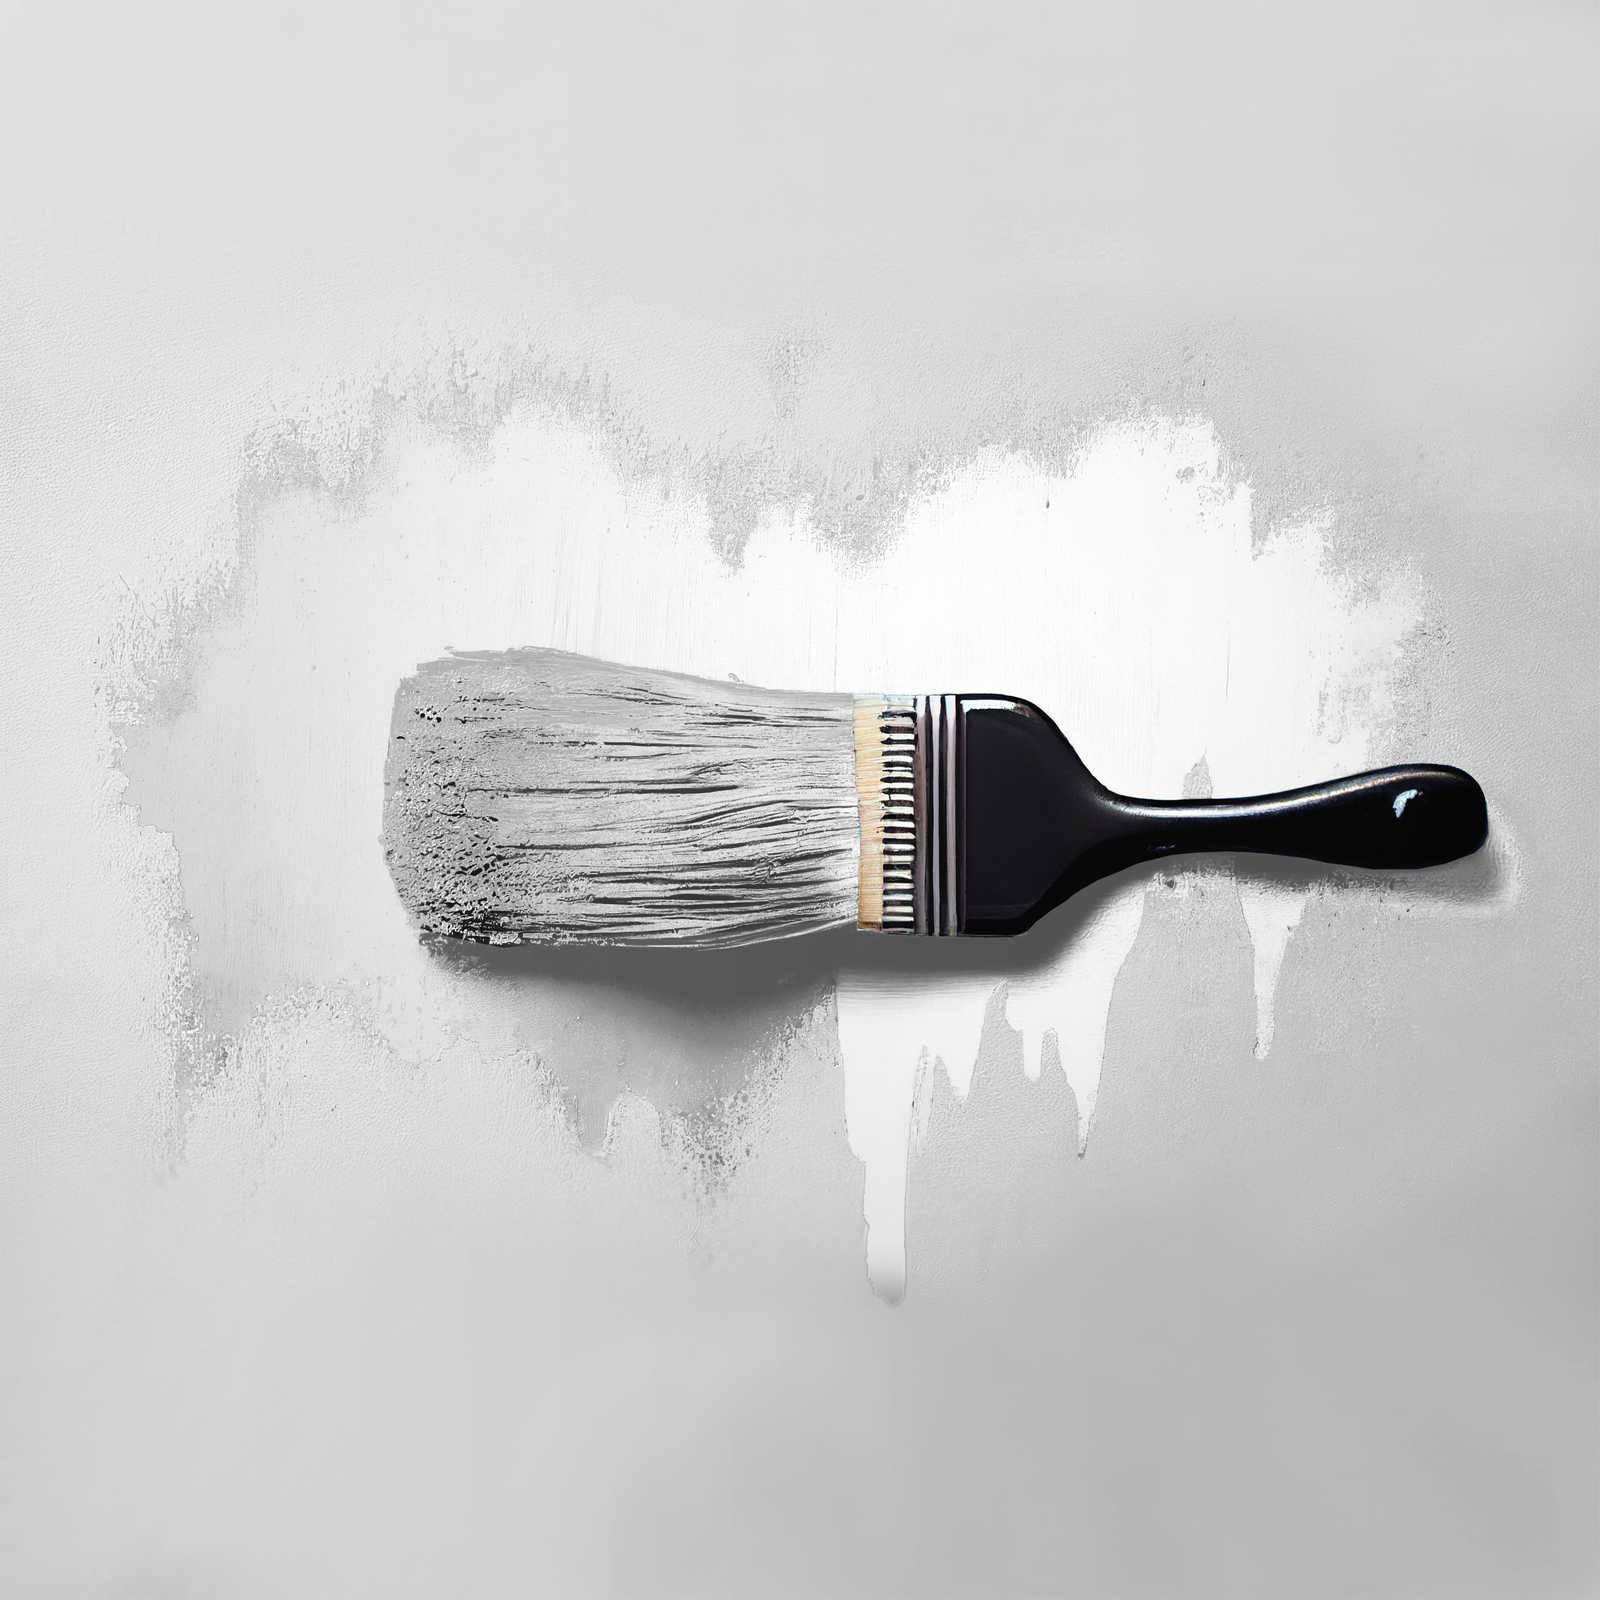             Pittura murale TCK1000 »Melting Marshmellow« in bianco neutro – 2,5 litri
        